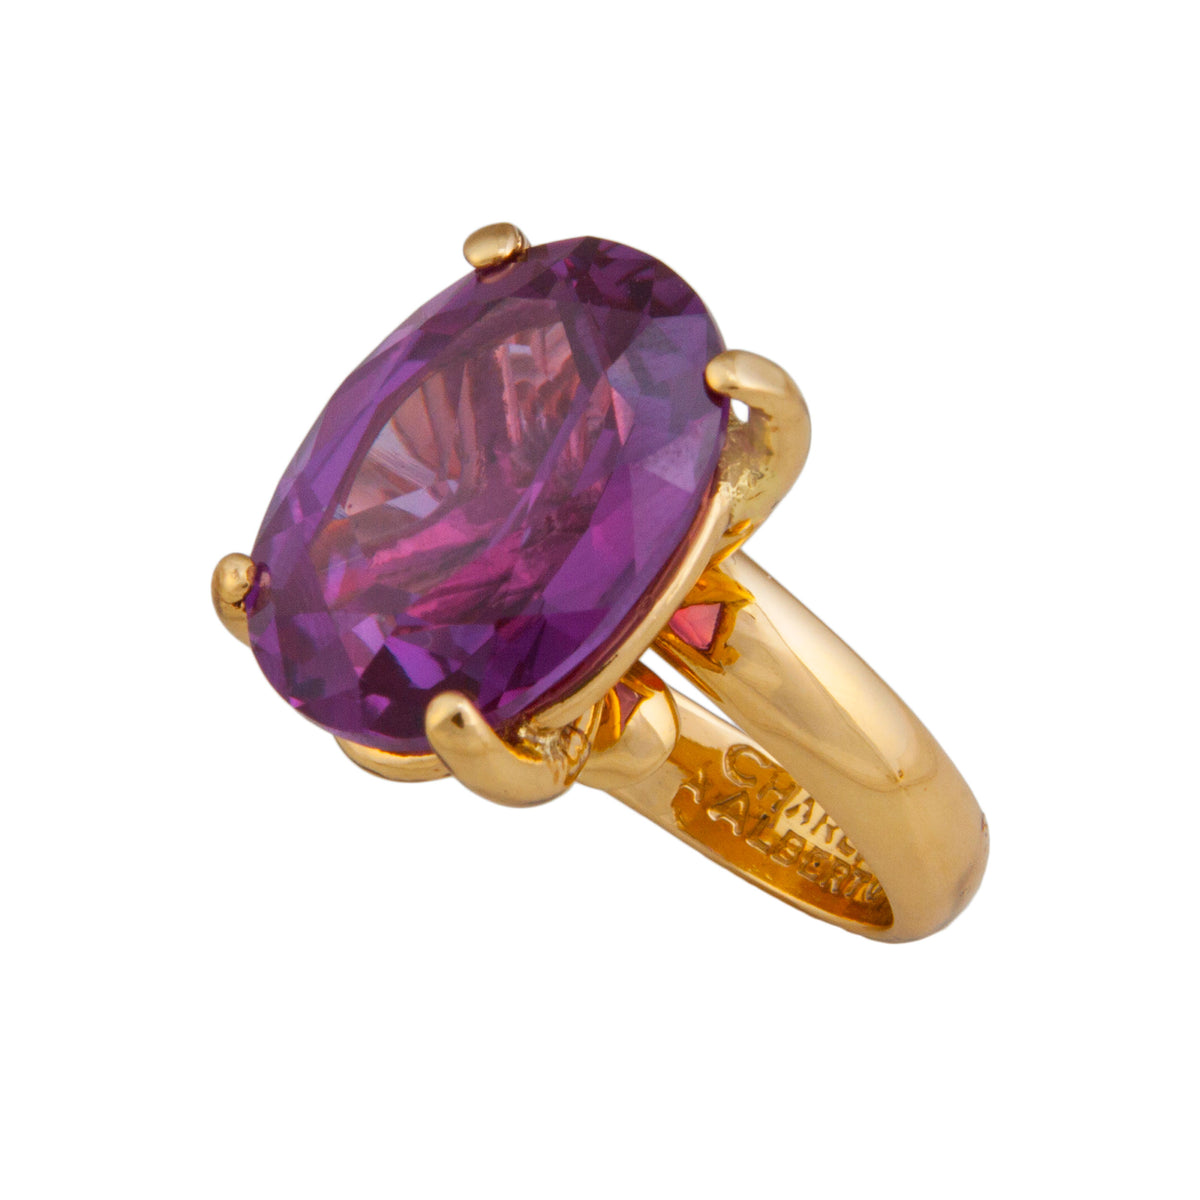 Charles Albert Jewelry - Alchemia Amethyst Prong Adjustable Ring